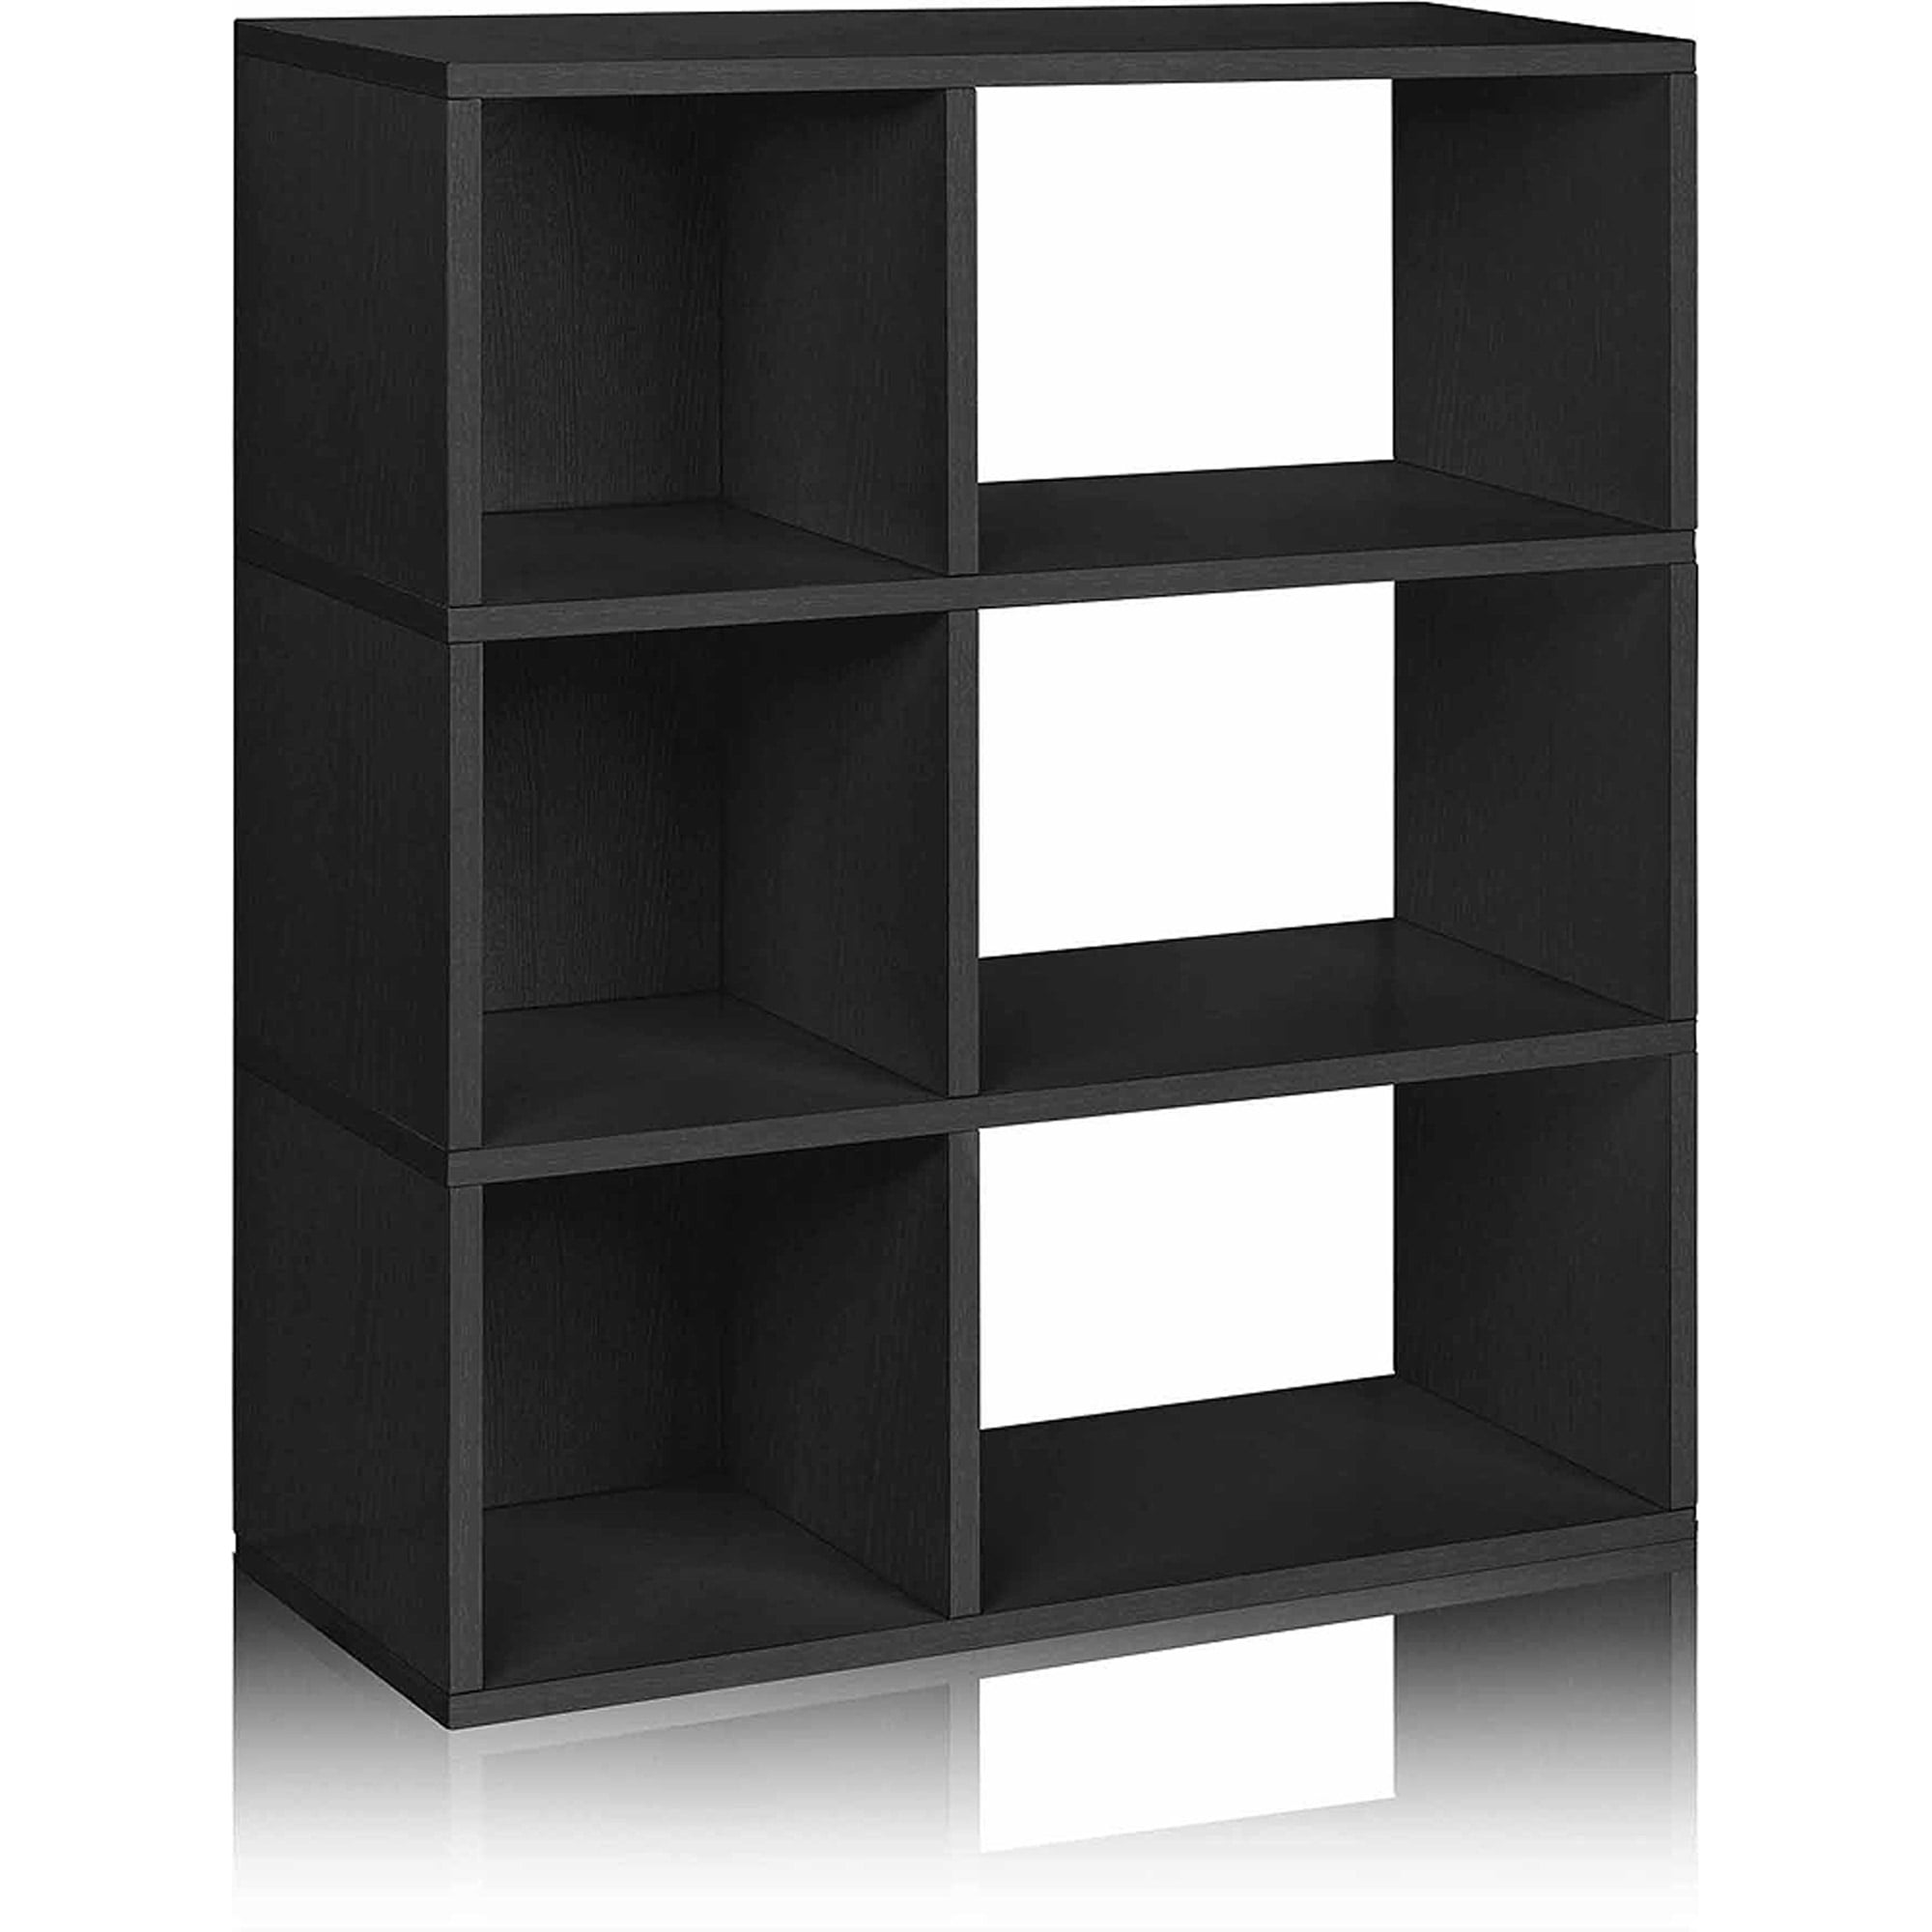 Way Basics Eco 3 Shelf Sutton Bookcase And Cubby Storage Black Walmart Com Walmart Com